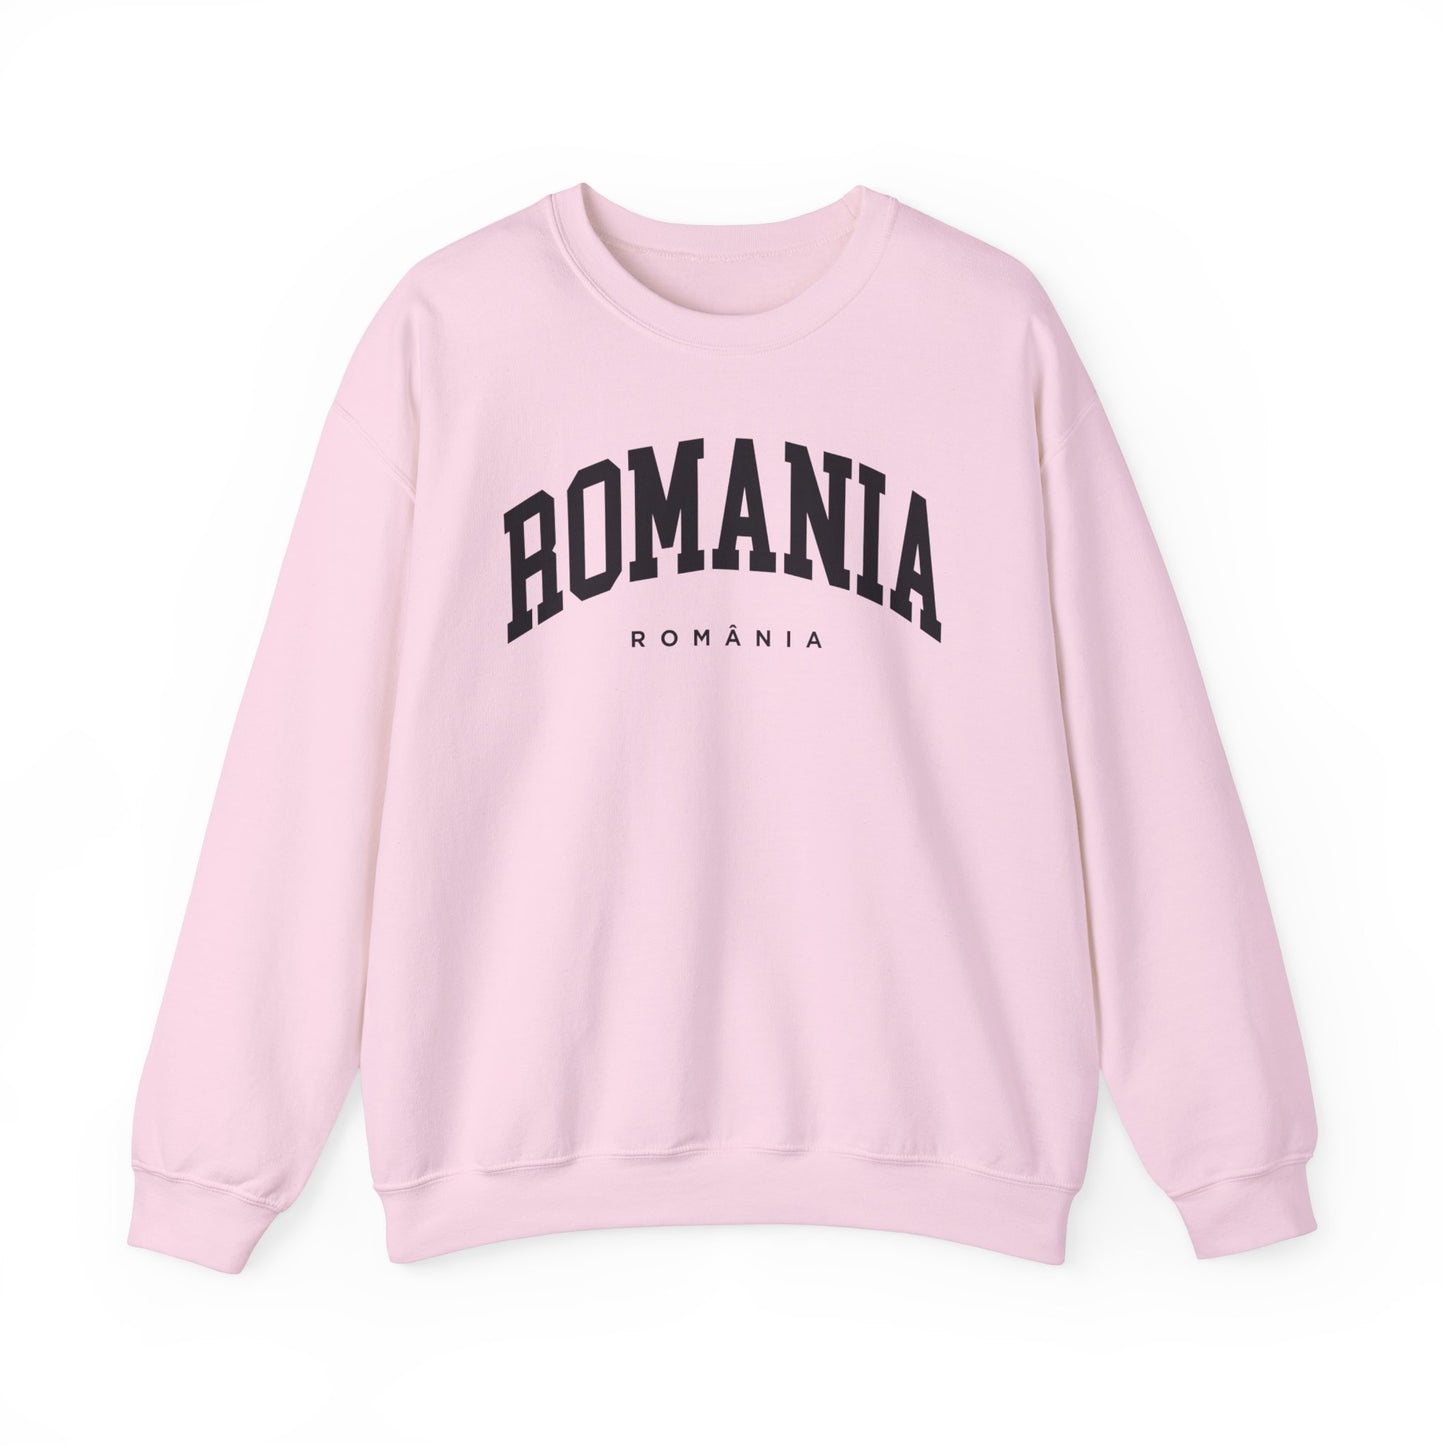 Romania Sweatshirt